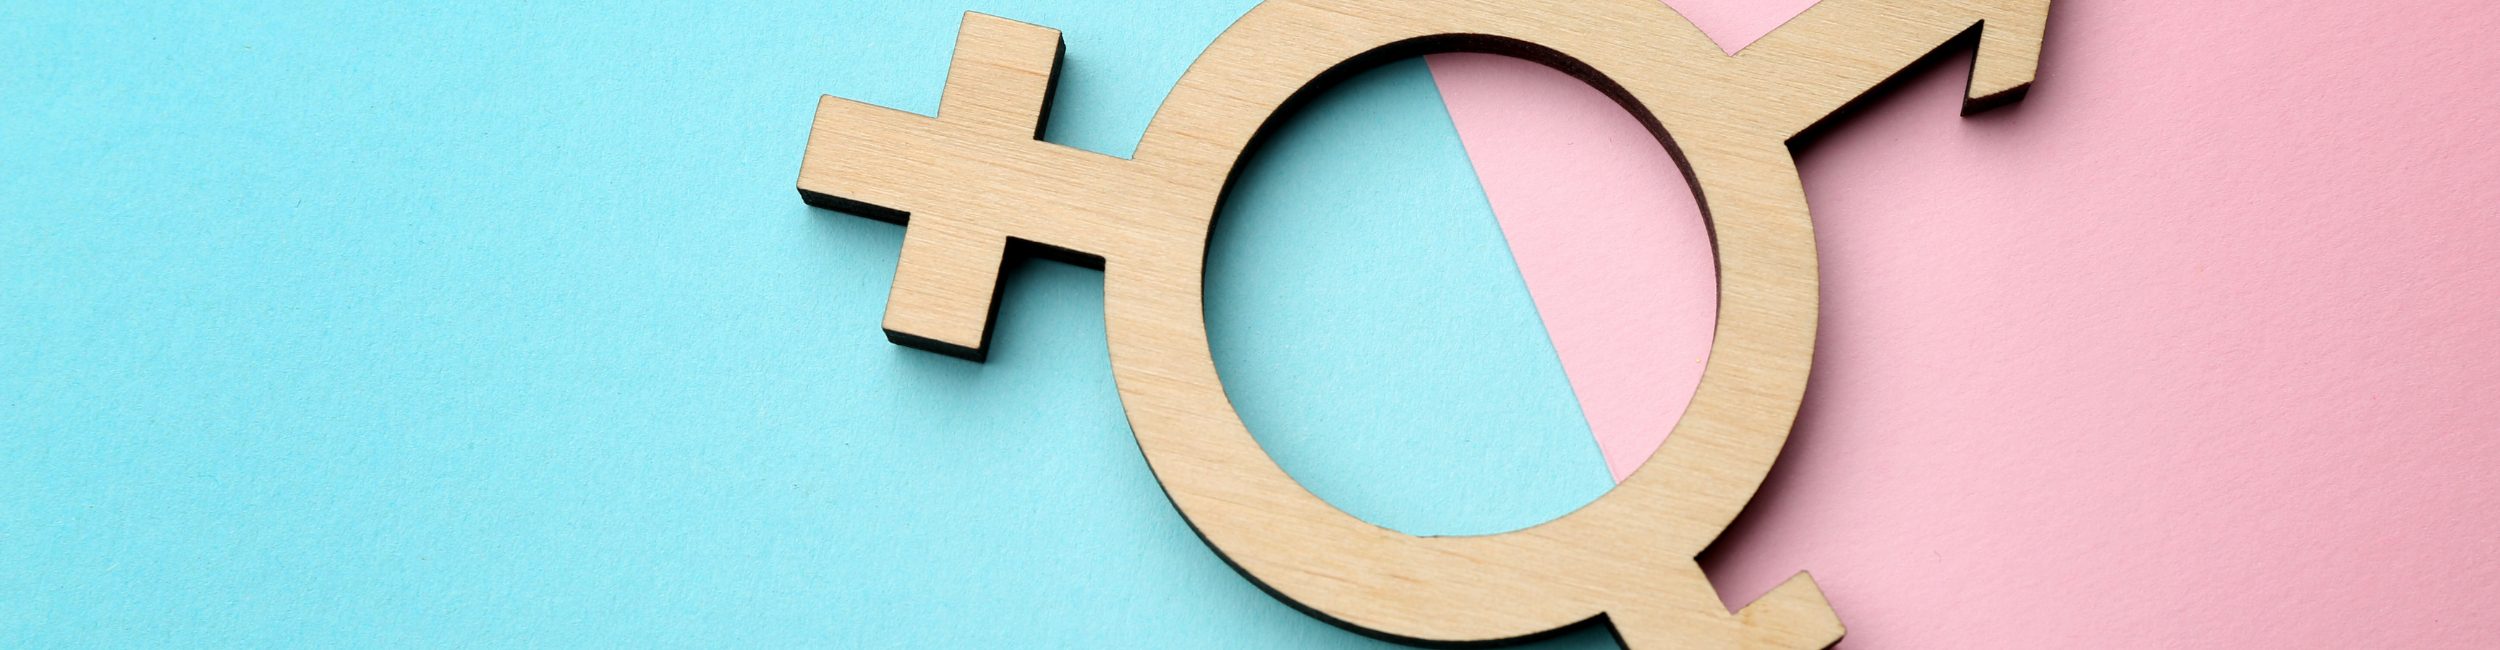 Gender symbol on a pink and blue background